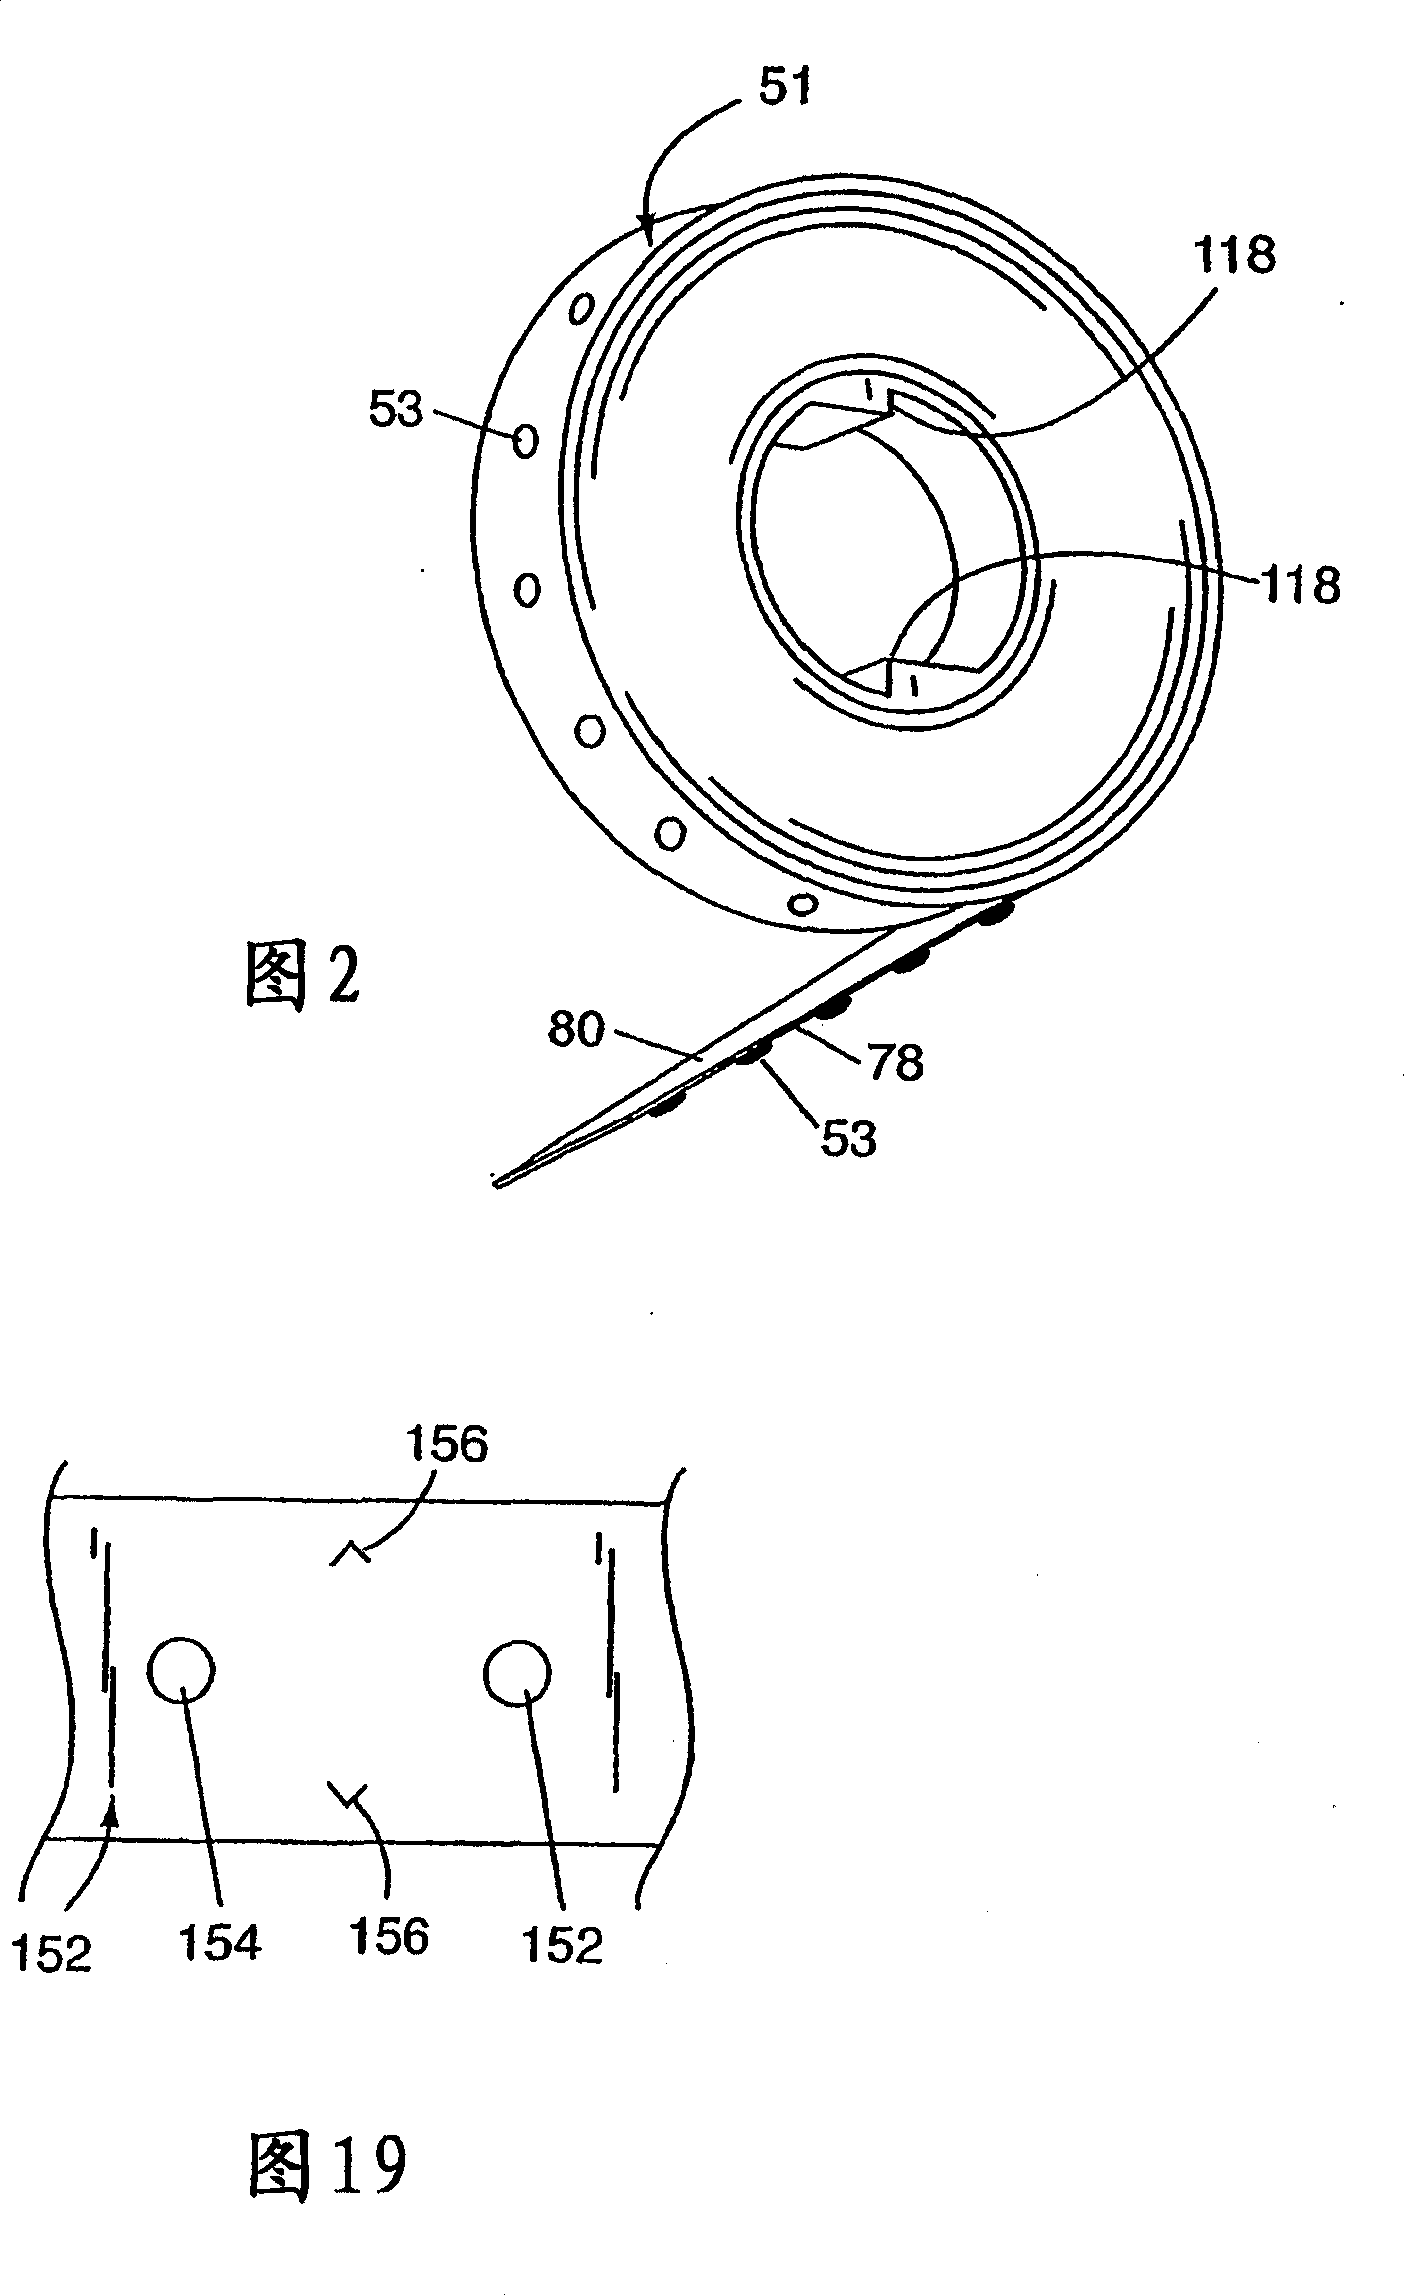 System for adhesive segment dispensing